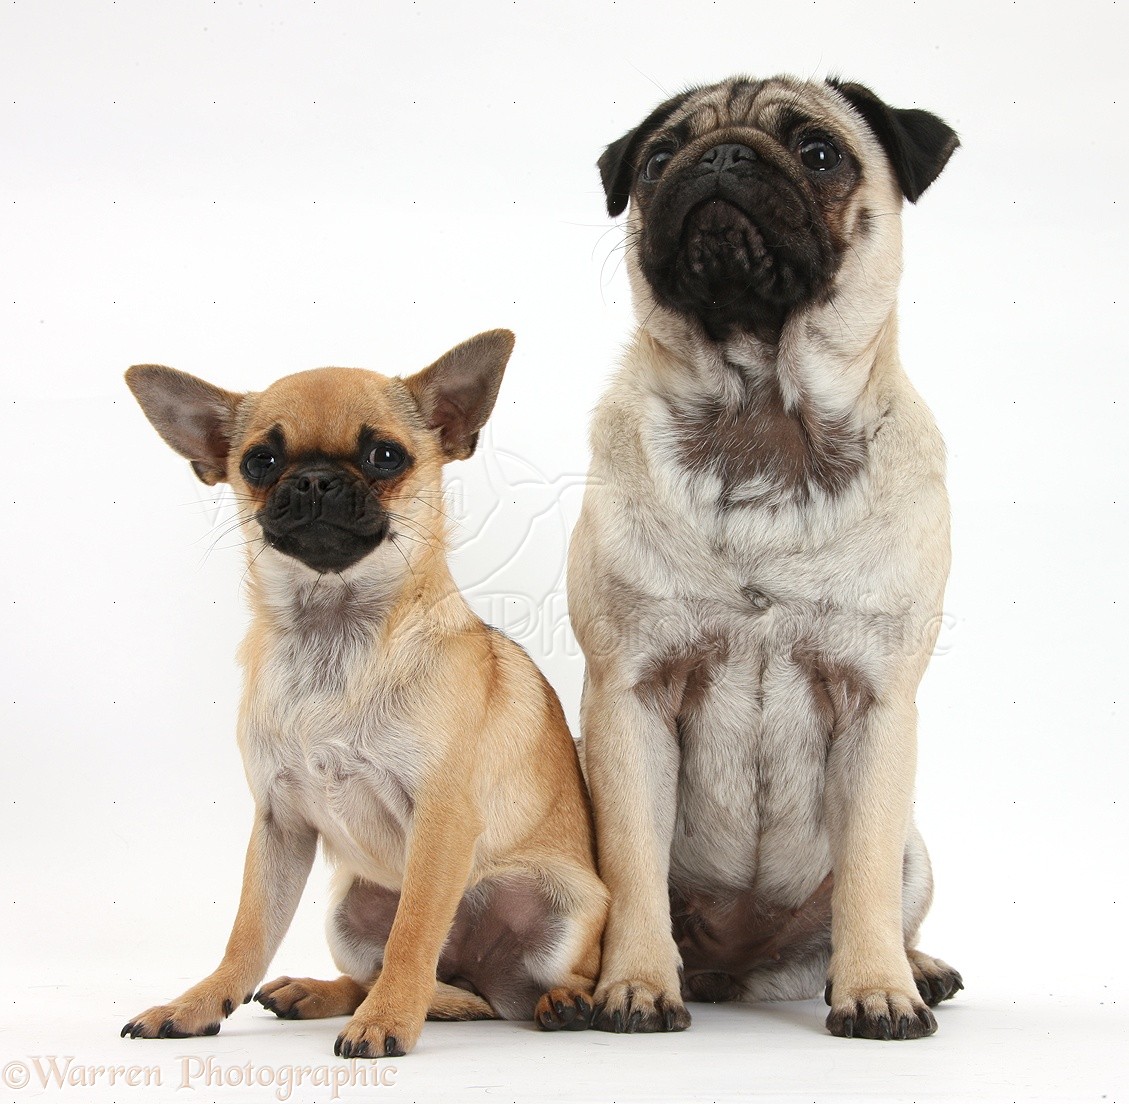 Dogs: Fawn Pug and Chug (Pug x Chihuahua), sitting photo WP36191